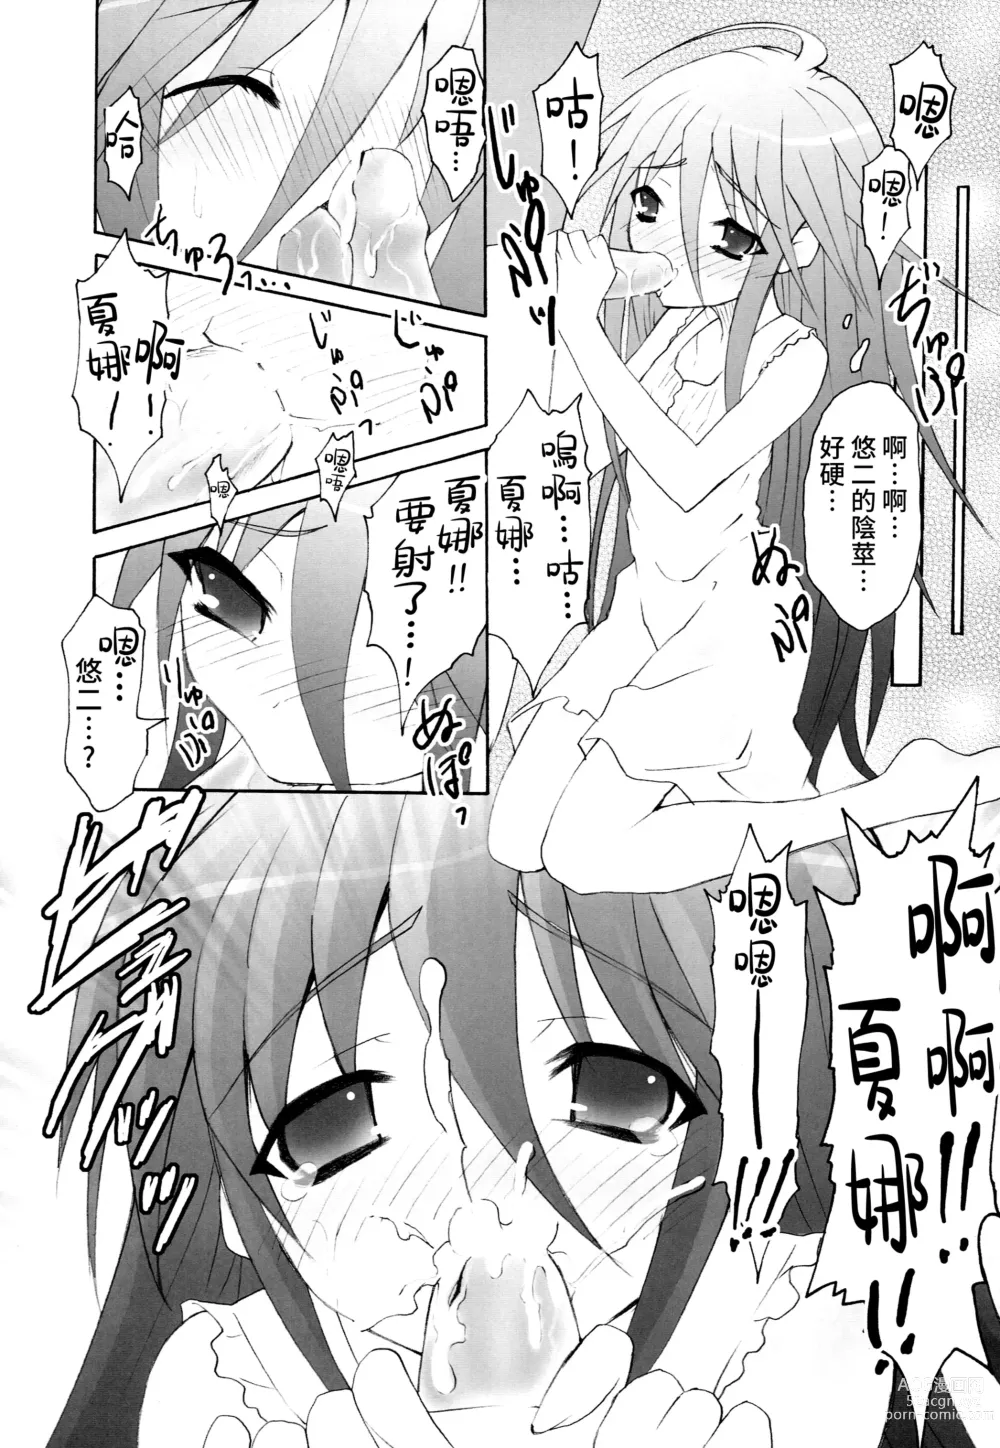 Page 9 of doujinshi AR19 Shakugan no Shana 9